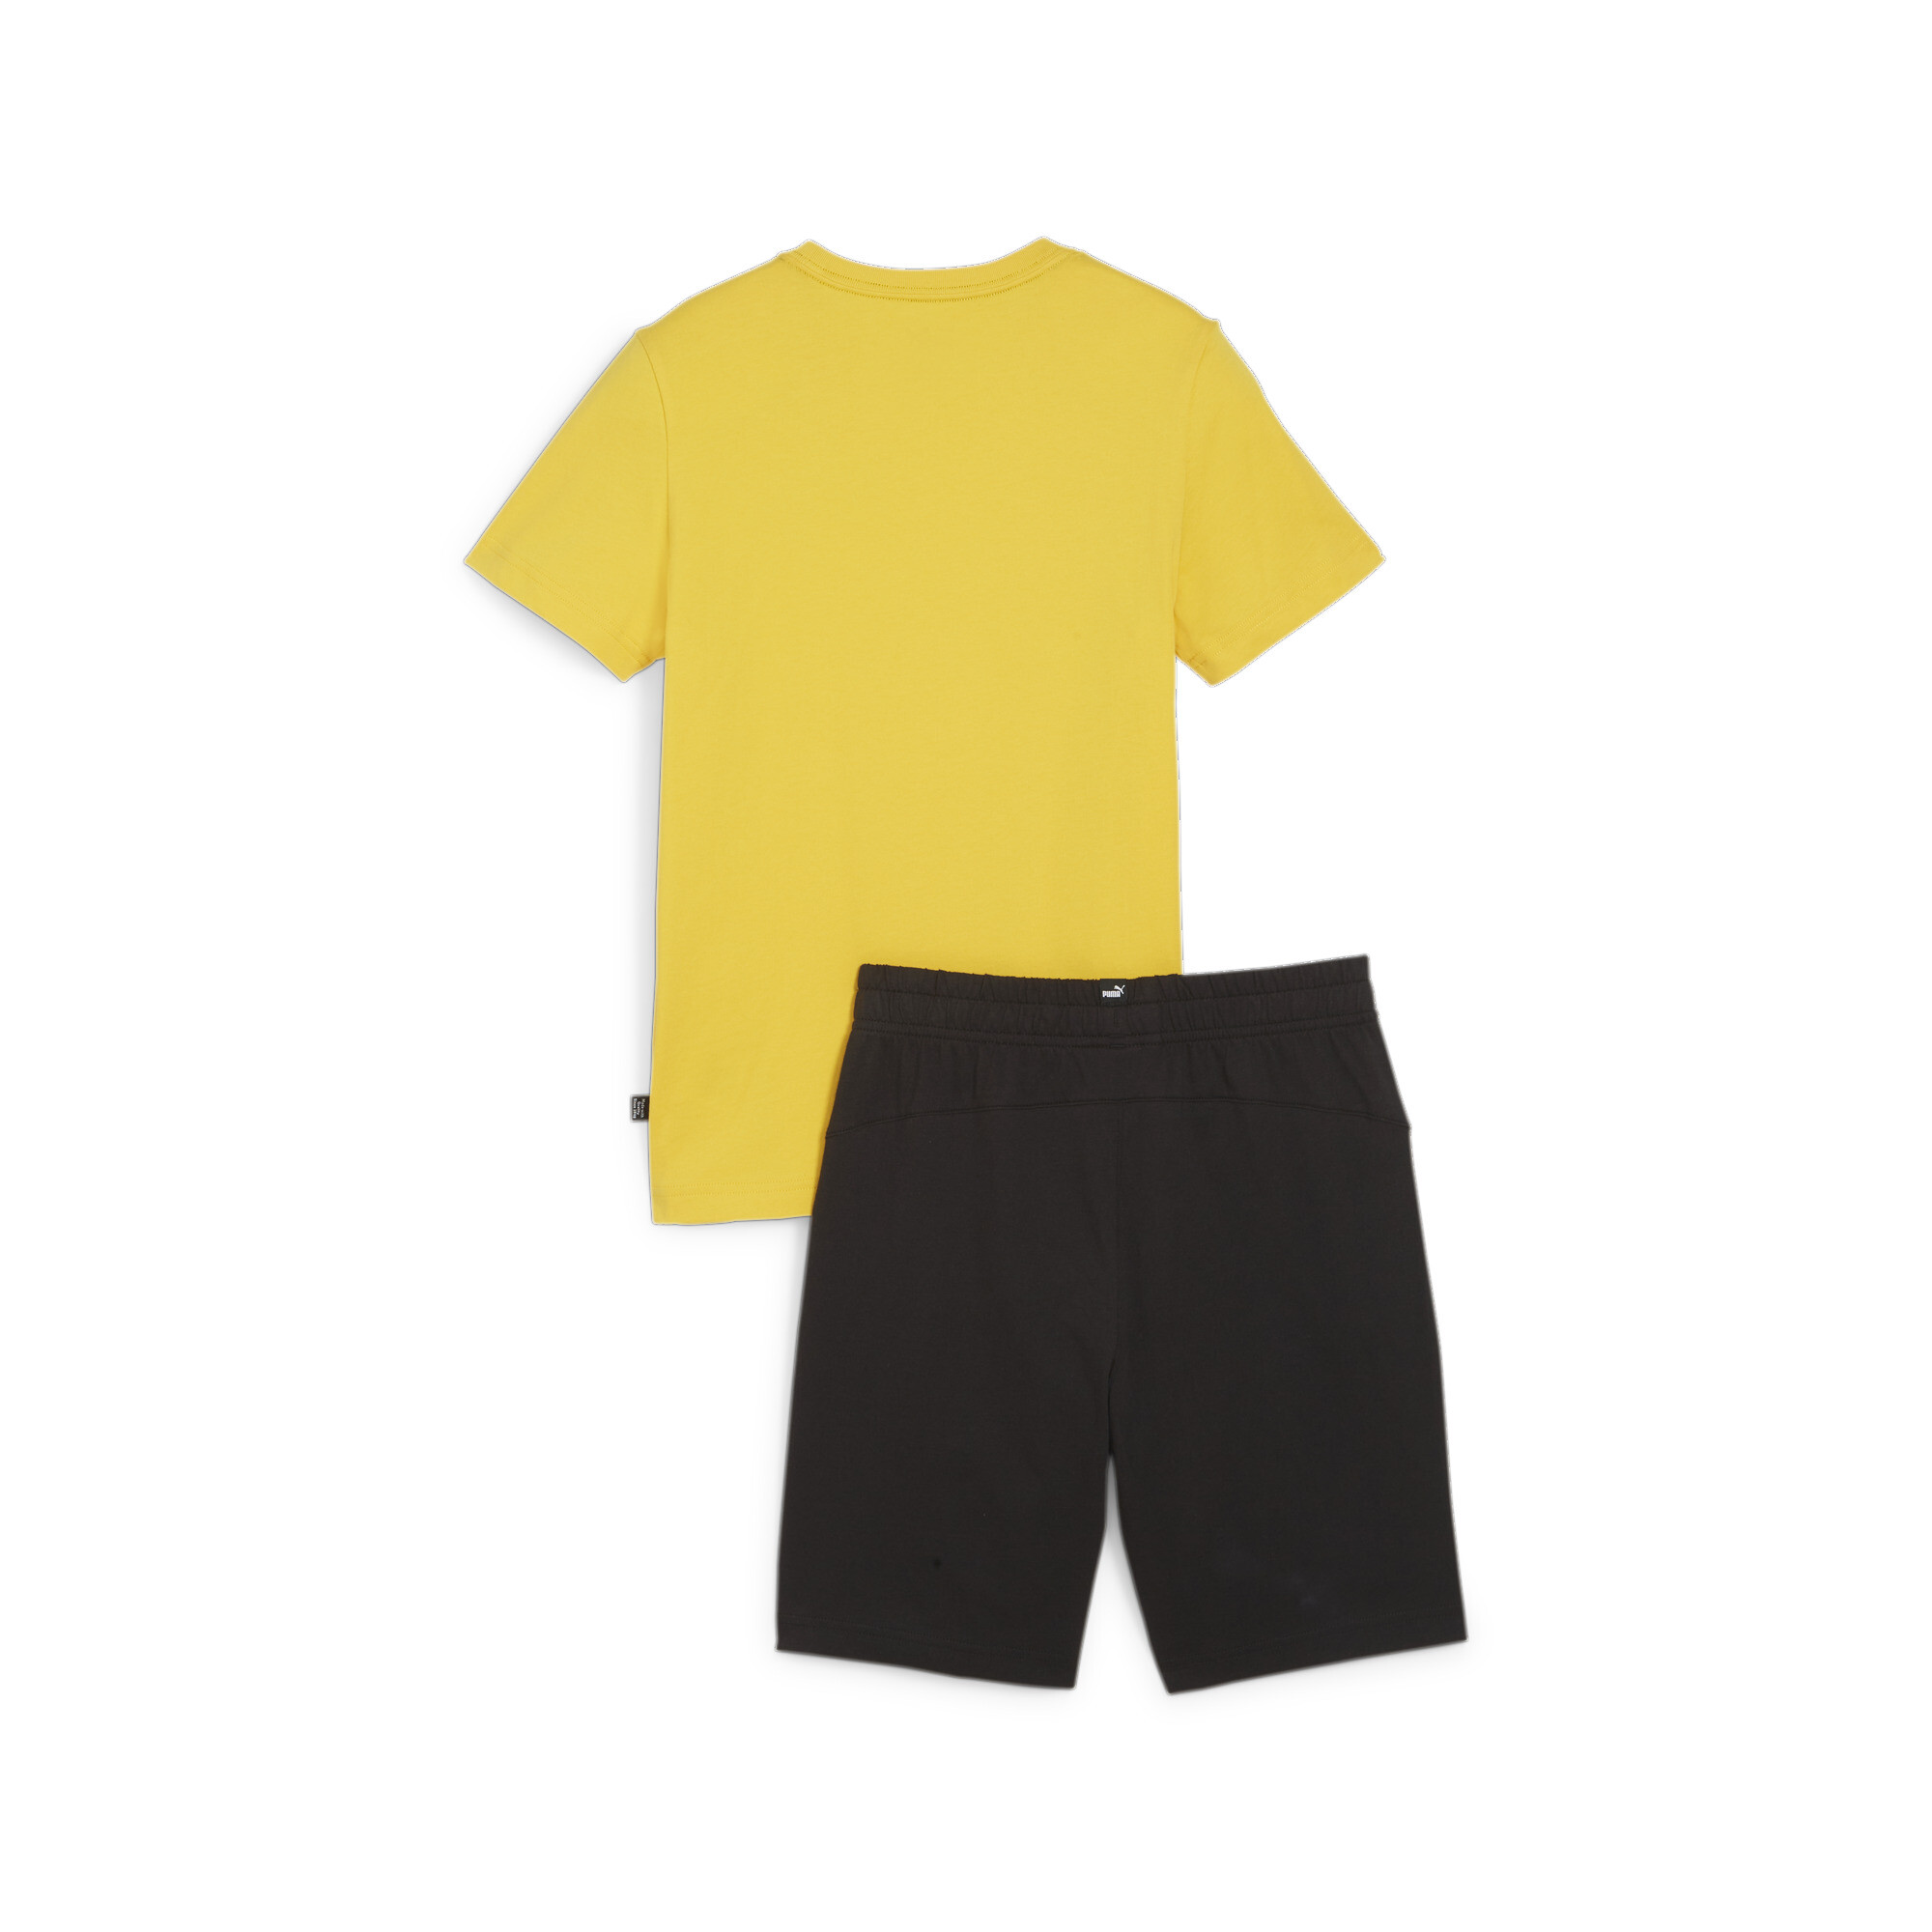 Men's Puma Jersey Youth Shorts Set, Yellow, Size 4-5Y, Clothing